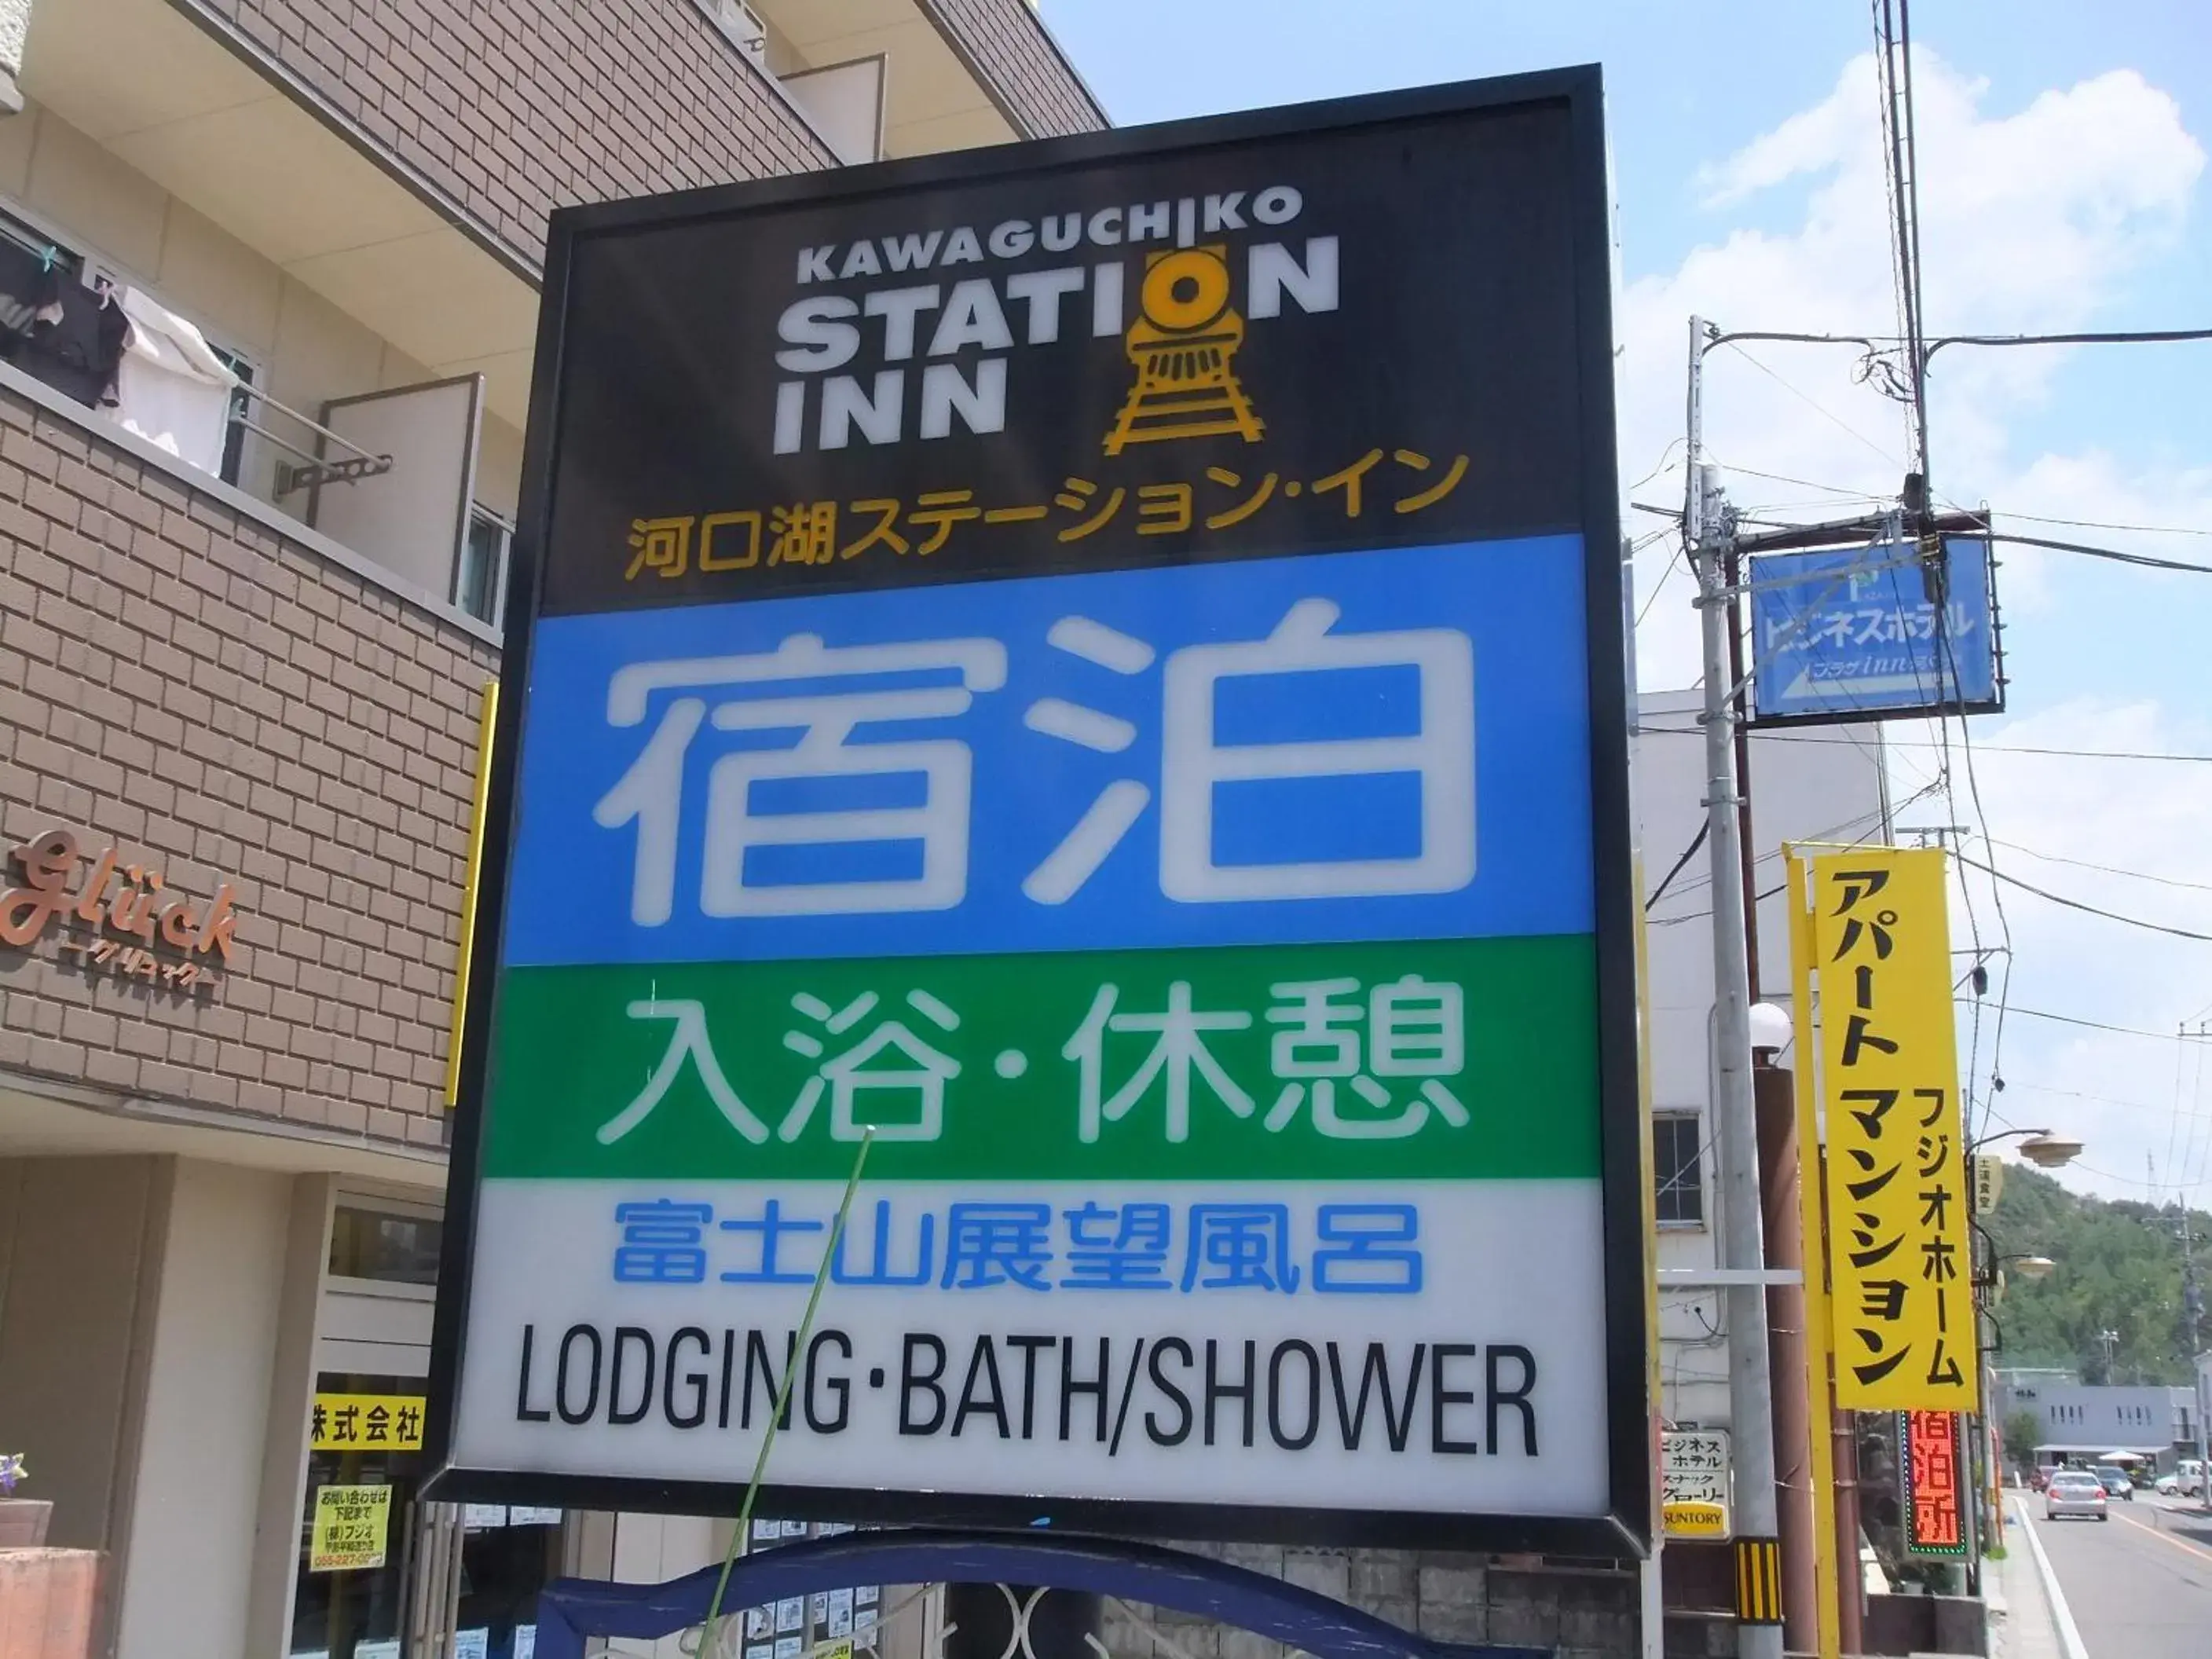 Logo/Certificate/Sign, Property Logo/Sign in Kawaguchiko Station Inn